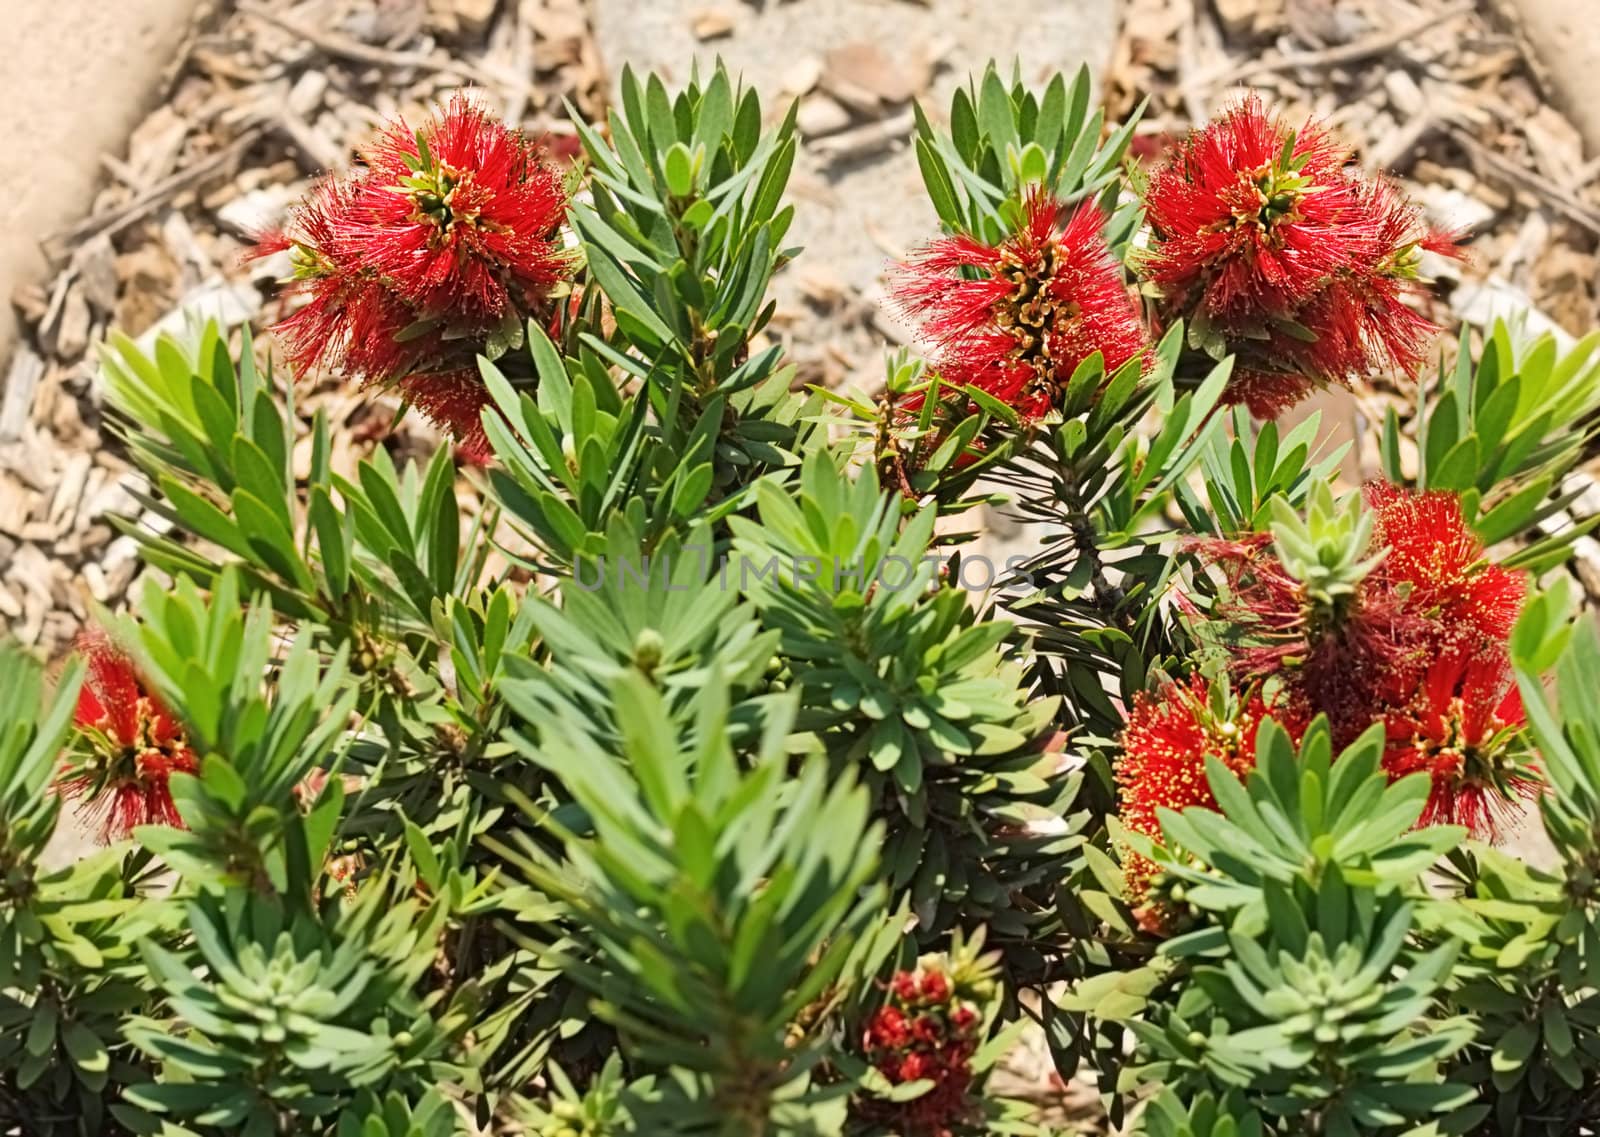 Australian native flower red callistemon little john with green foliage